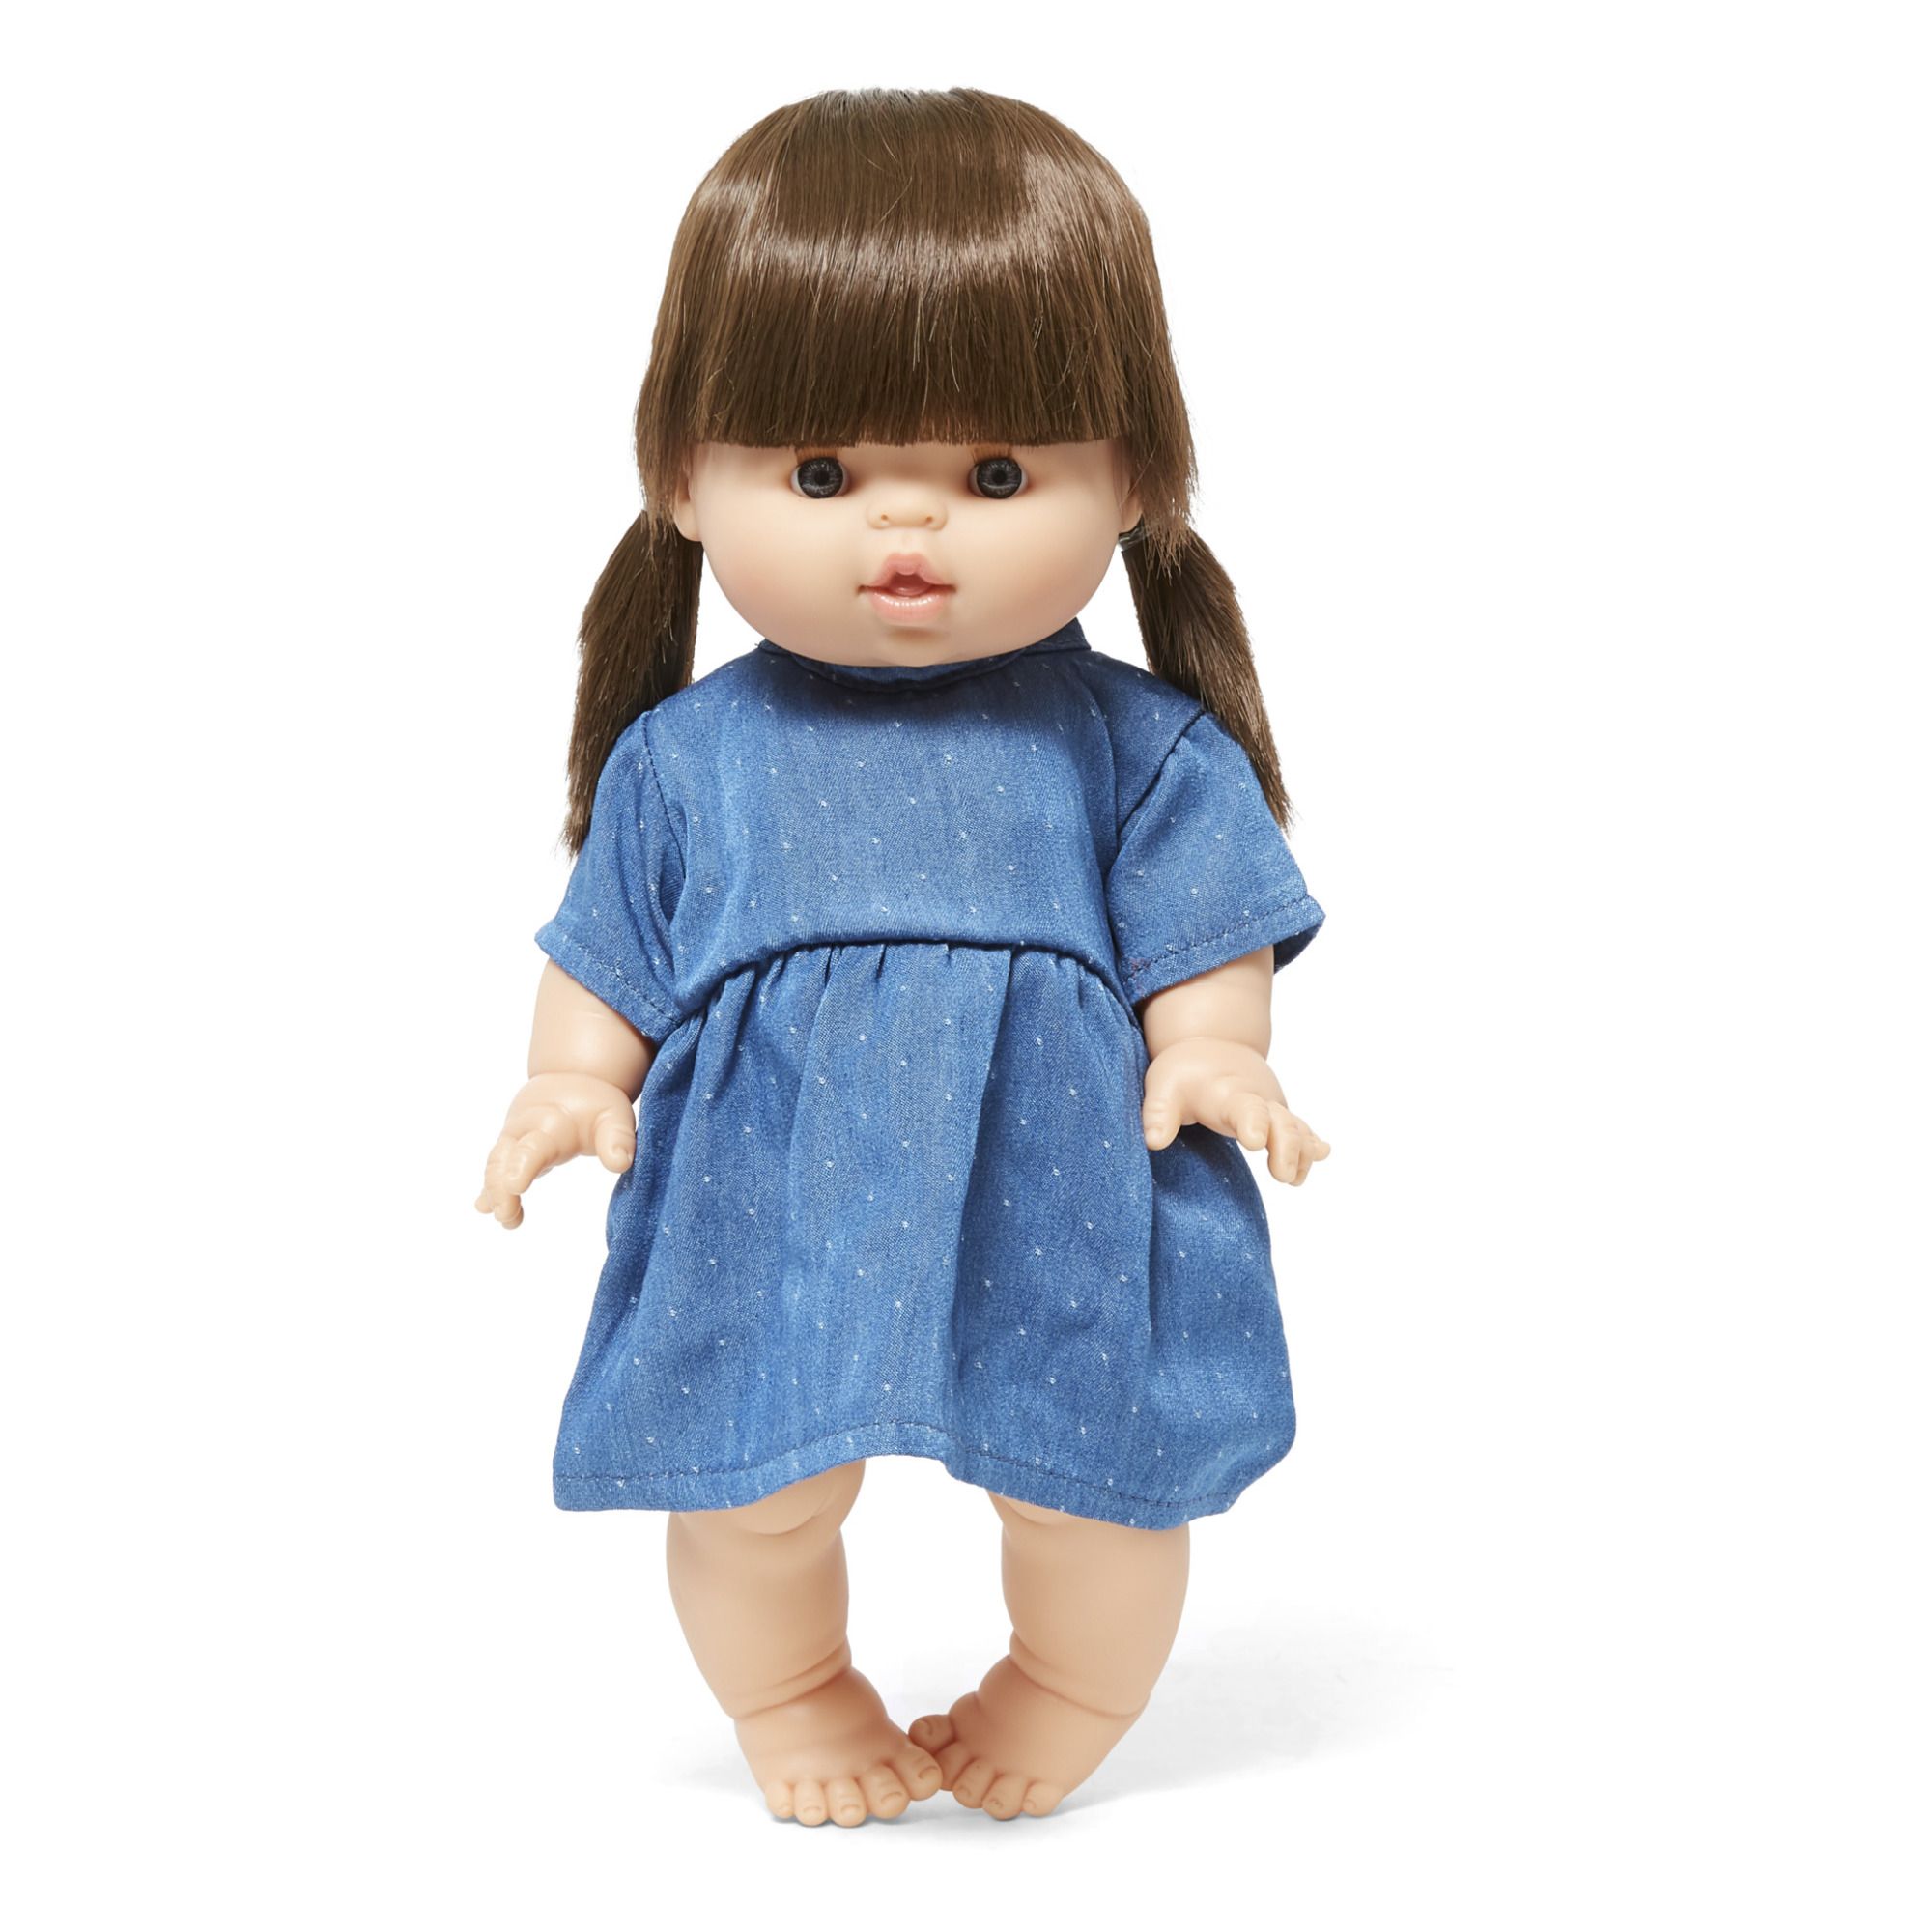 Nina Dress-up Doll Minikane Toys and Hobbies Children